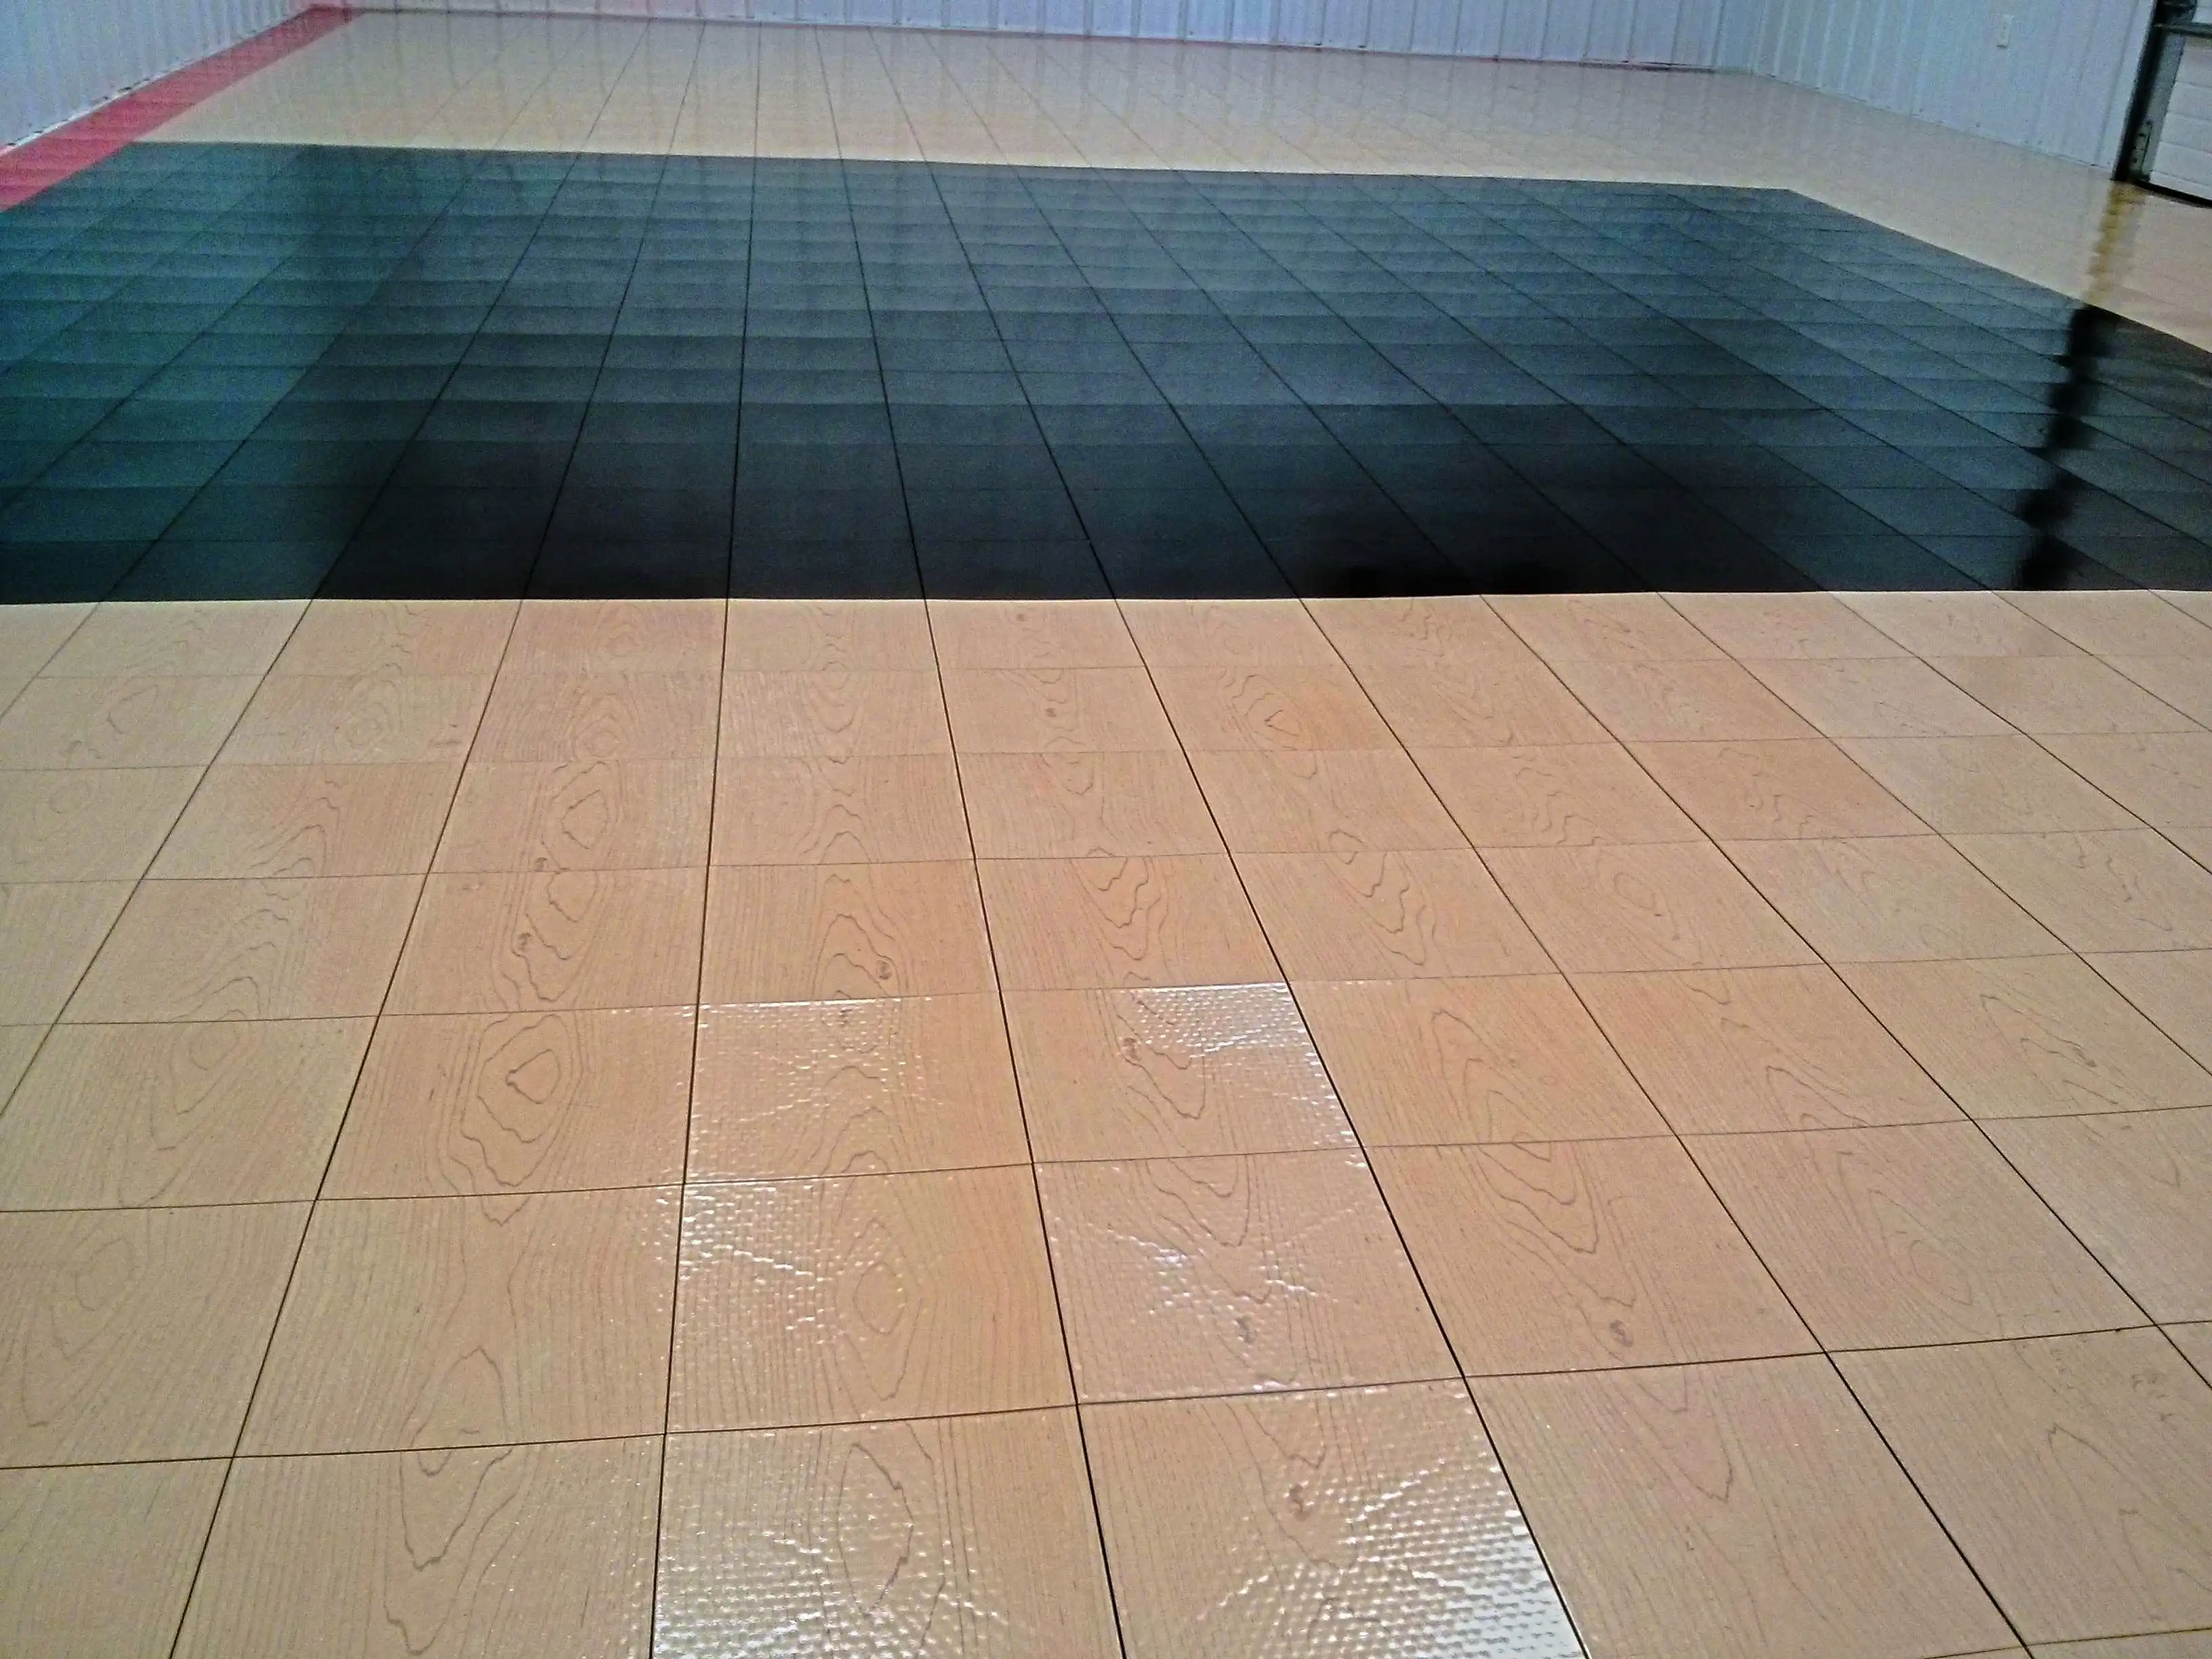 response-brand-polypropylene-flooring-by-sport-court